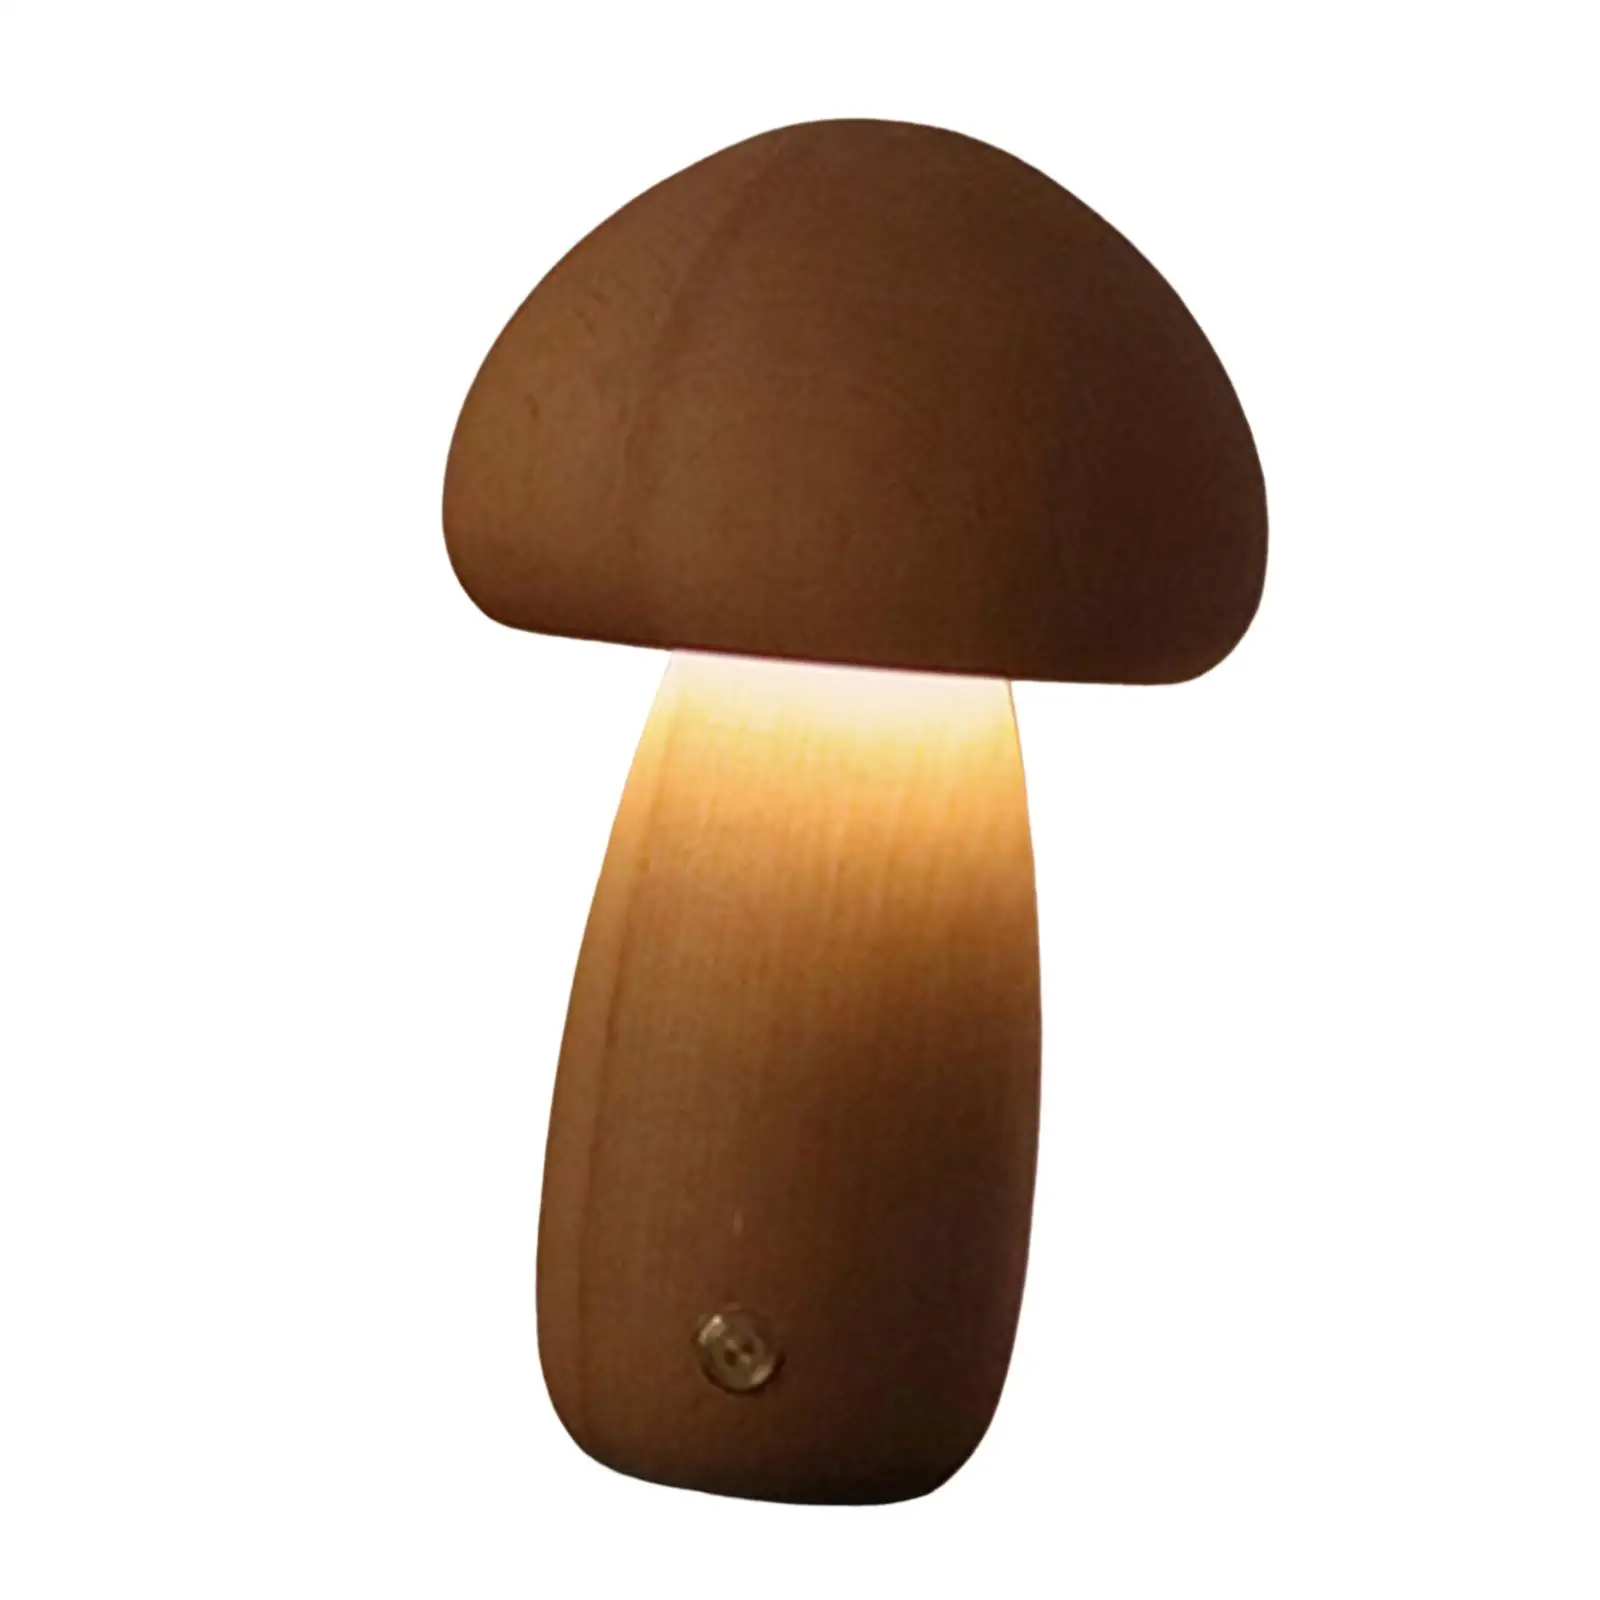 Mushroom Table Lamp Night Light Ornament for Dormitory Bar Home Indoor Decor